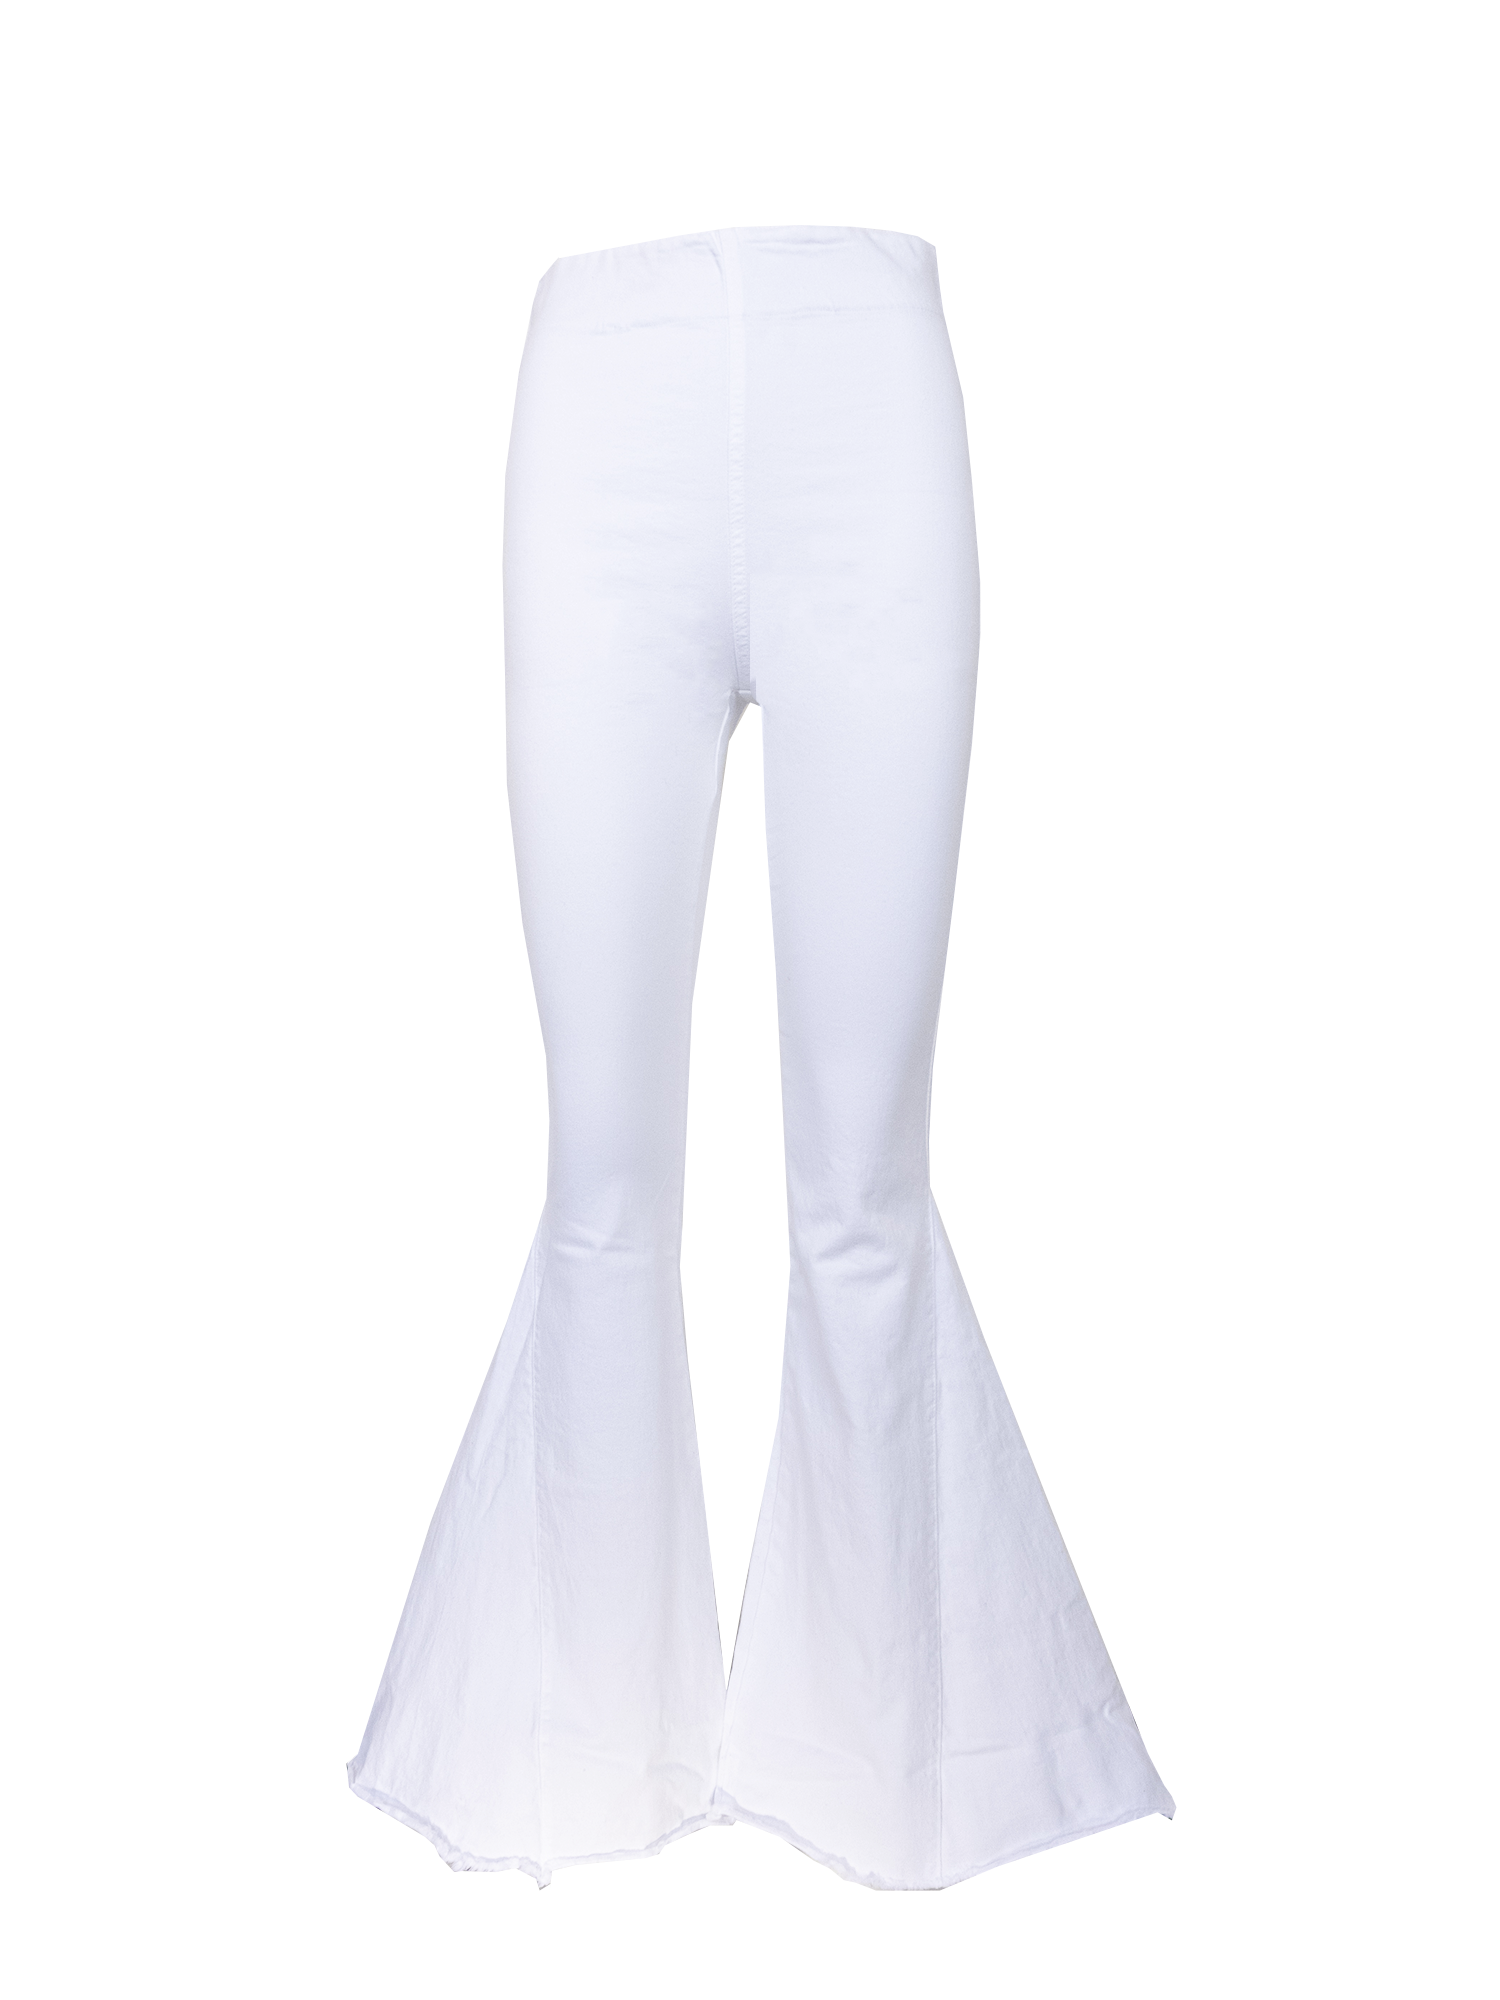 LOLISSIMA - white cotton flared pants